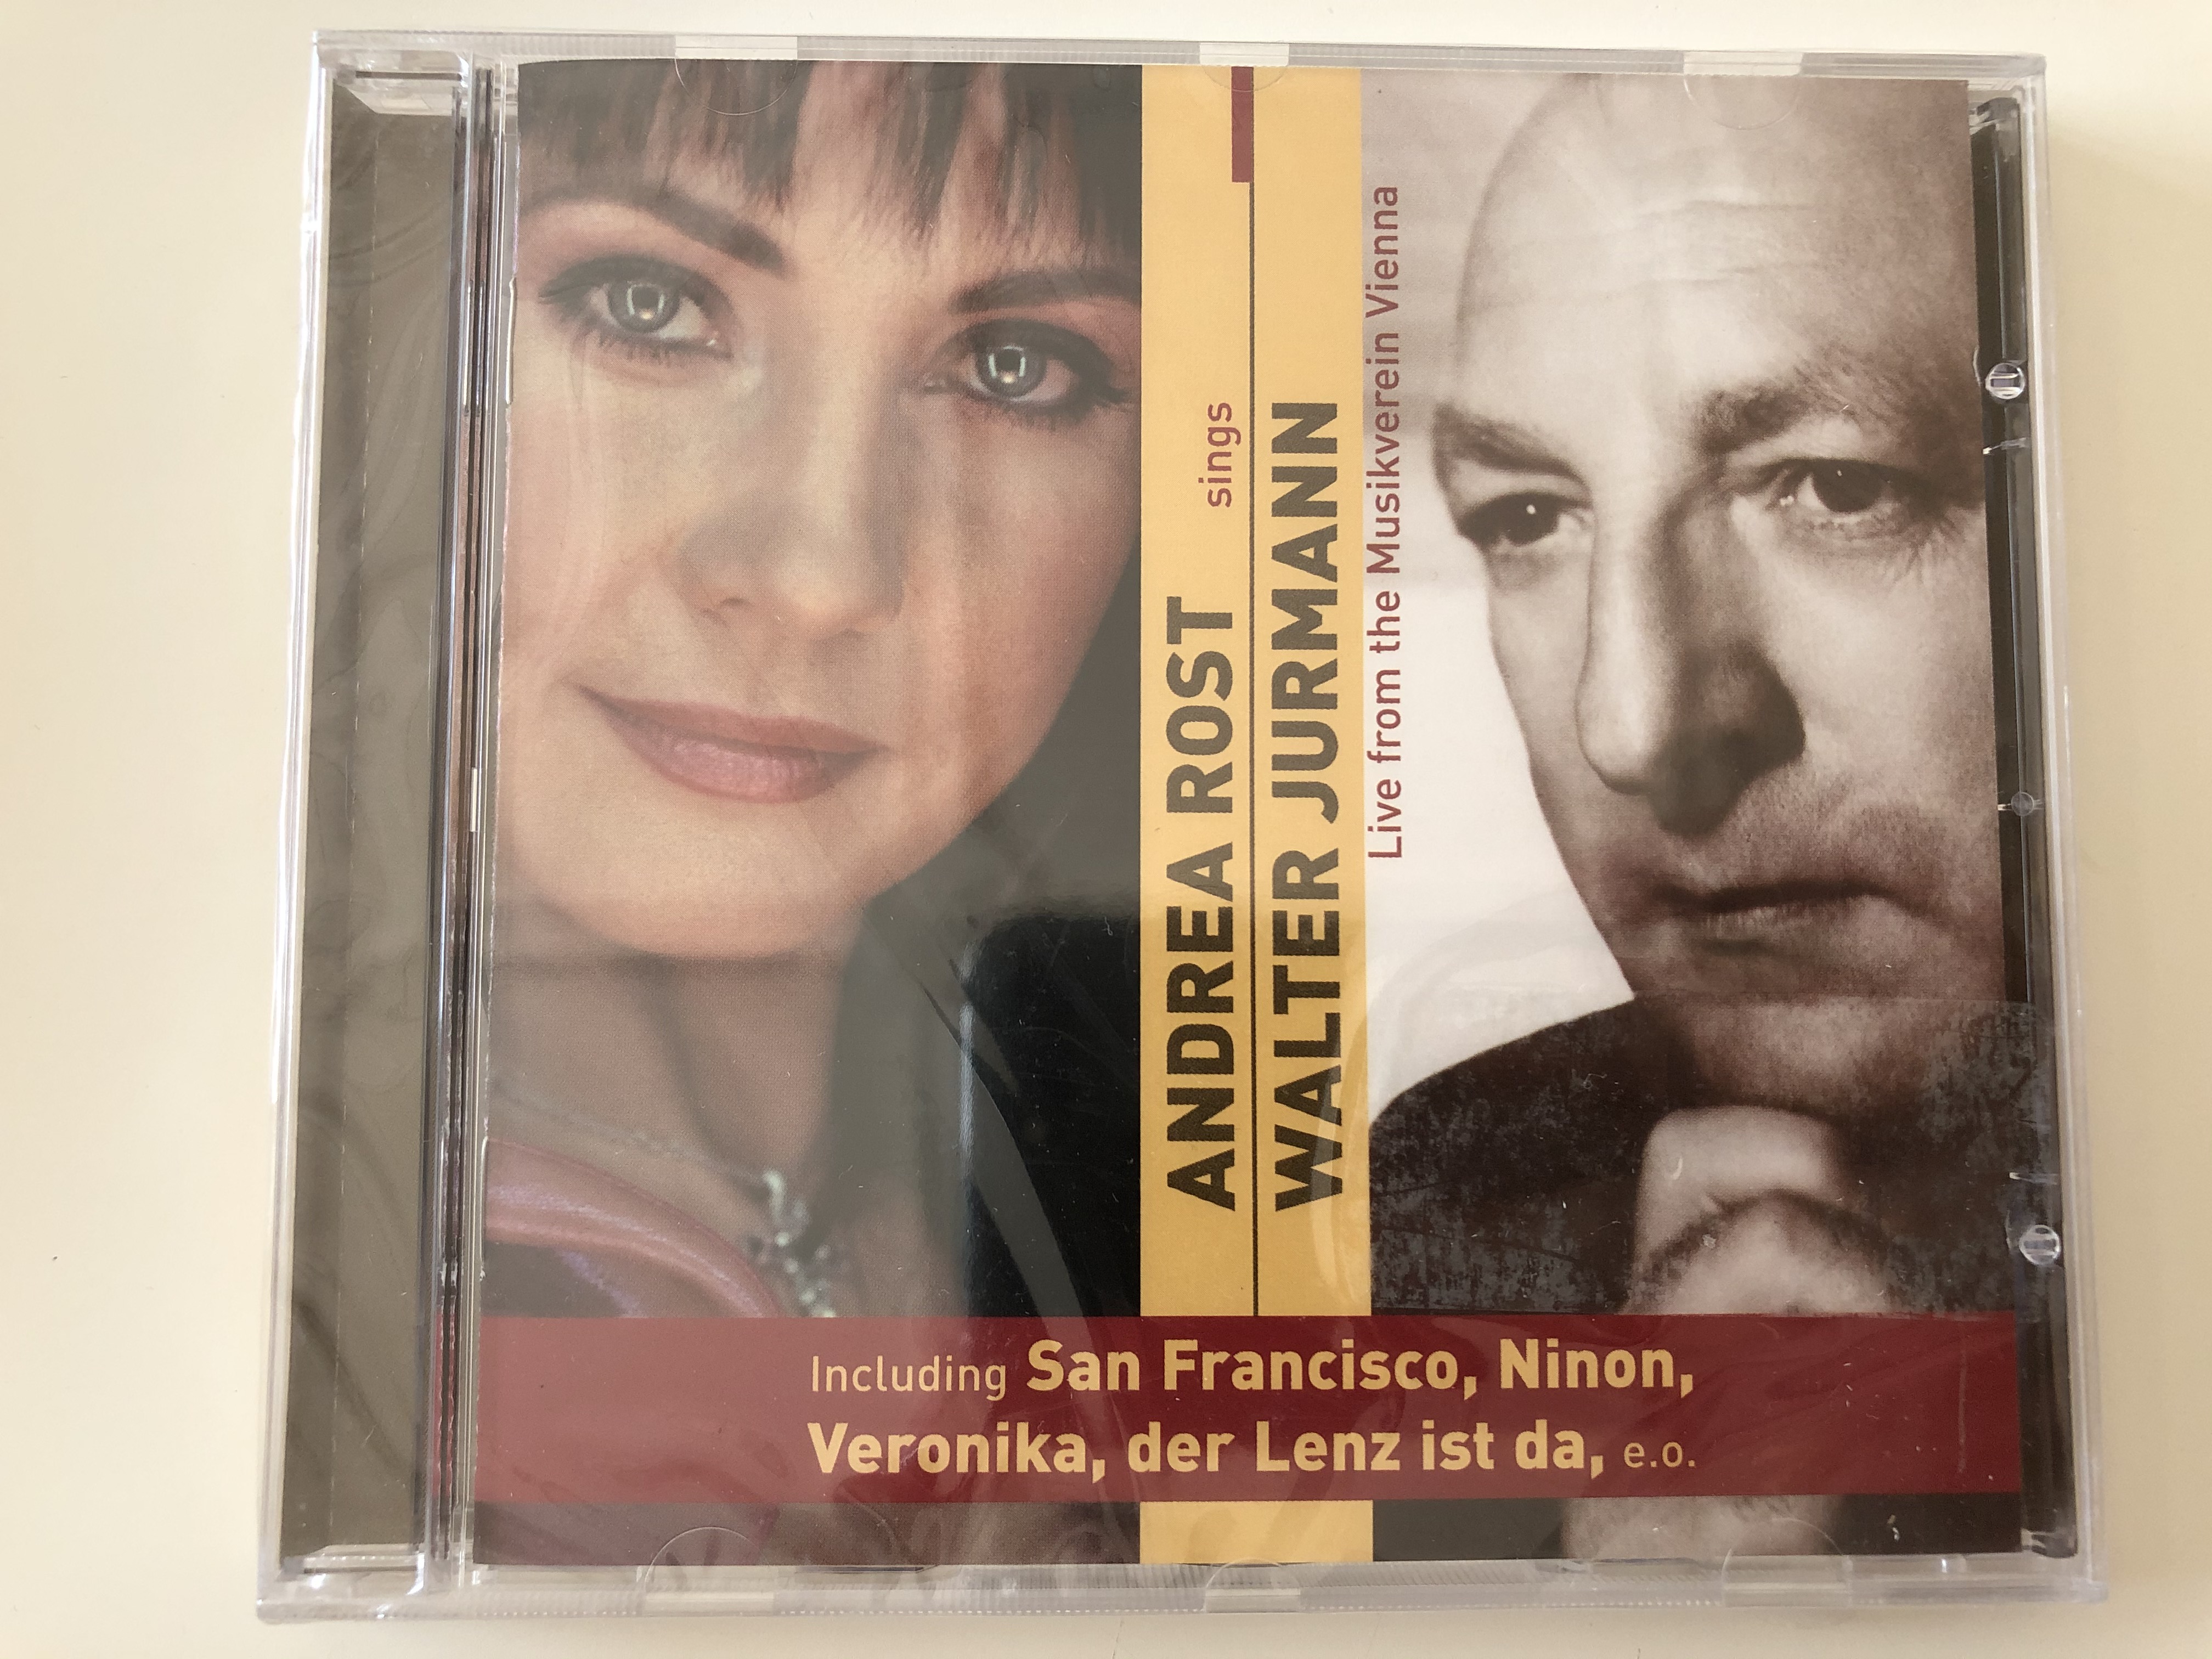 andrea-rost-sings-walter-jurmann-live-from-the-musikverein-vienna-including-san-francisco-ninon-veronika-der-lenz-ist-da-e.-o.-sony-bmg-music-audio-cd-2006-82876821442-1-.jpg